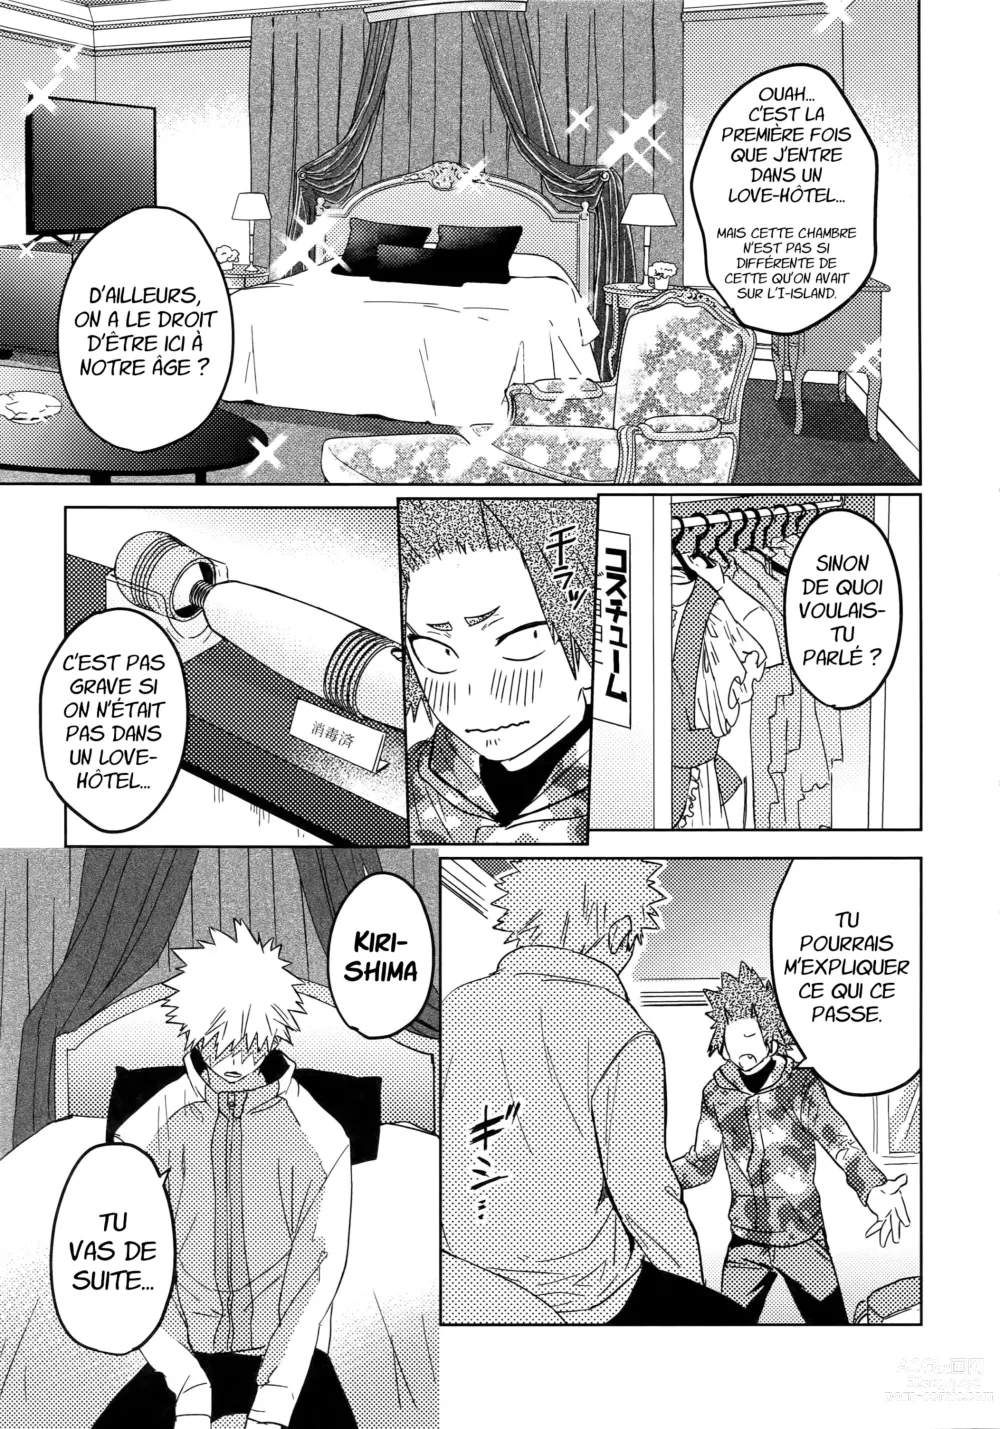 Page 6 of doujinshi Tasukero ya Red Riot